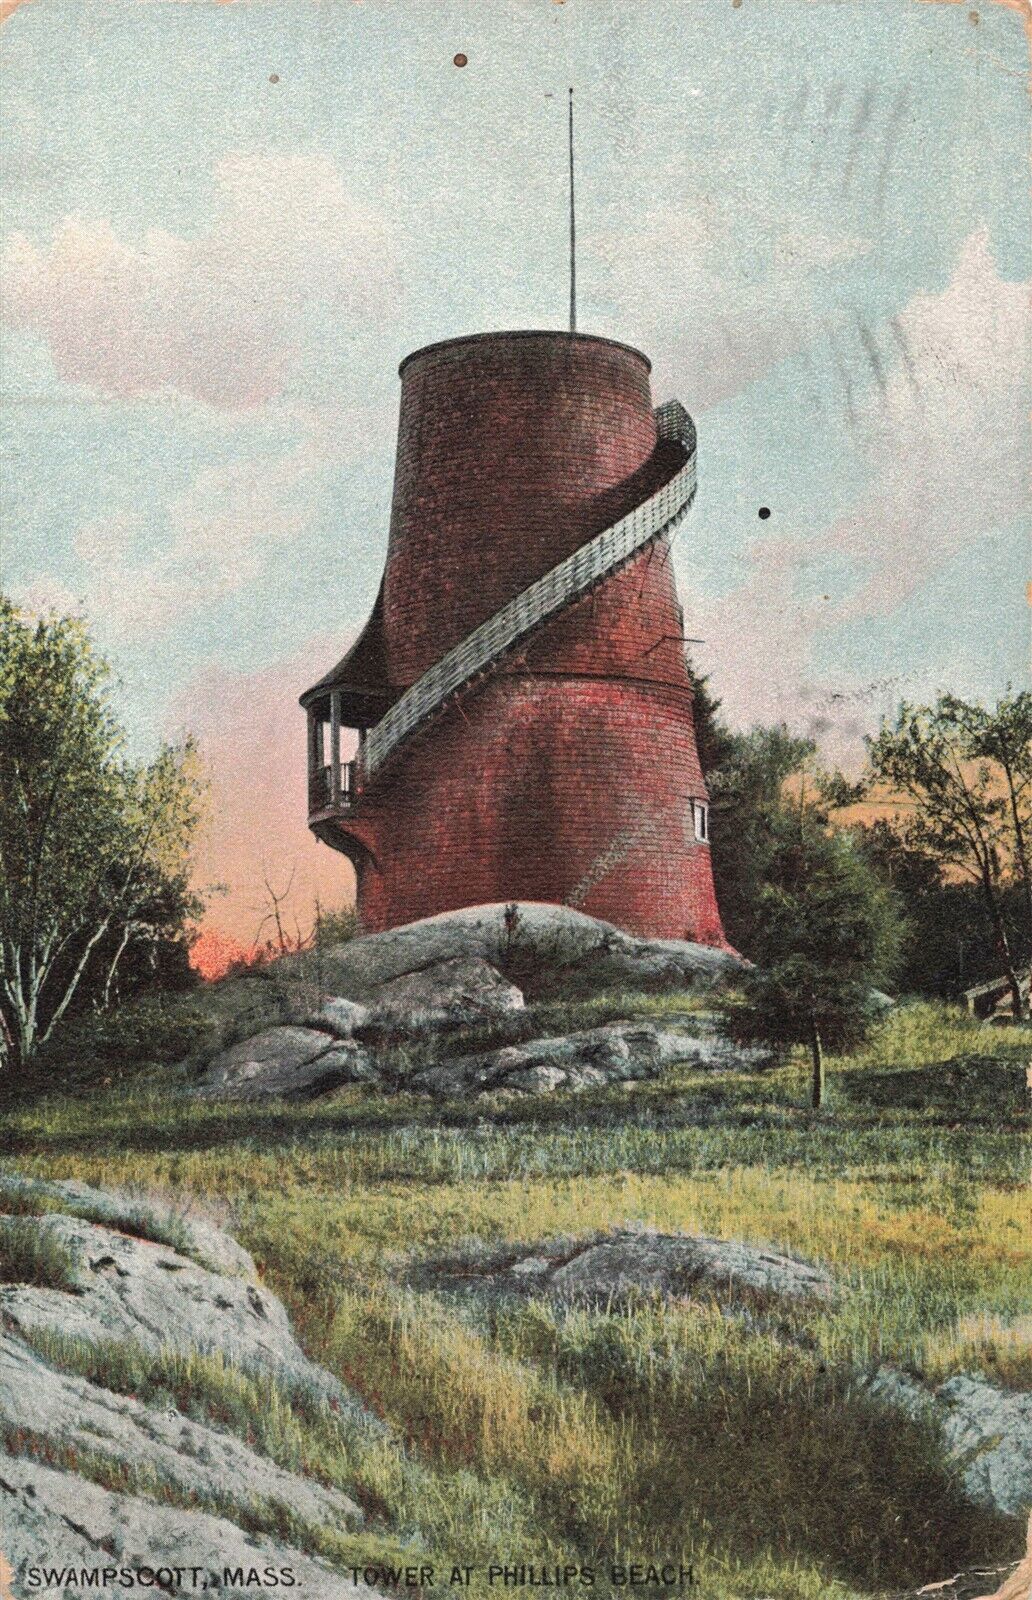 Swampscott MA Tower at Phillips Beach 1908 Postcard B351